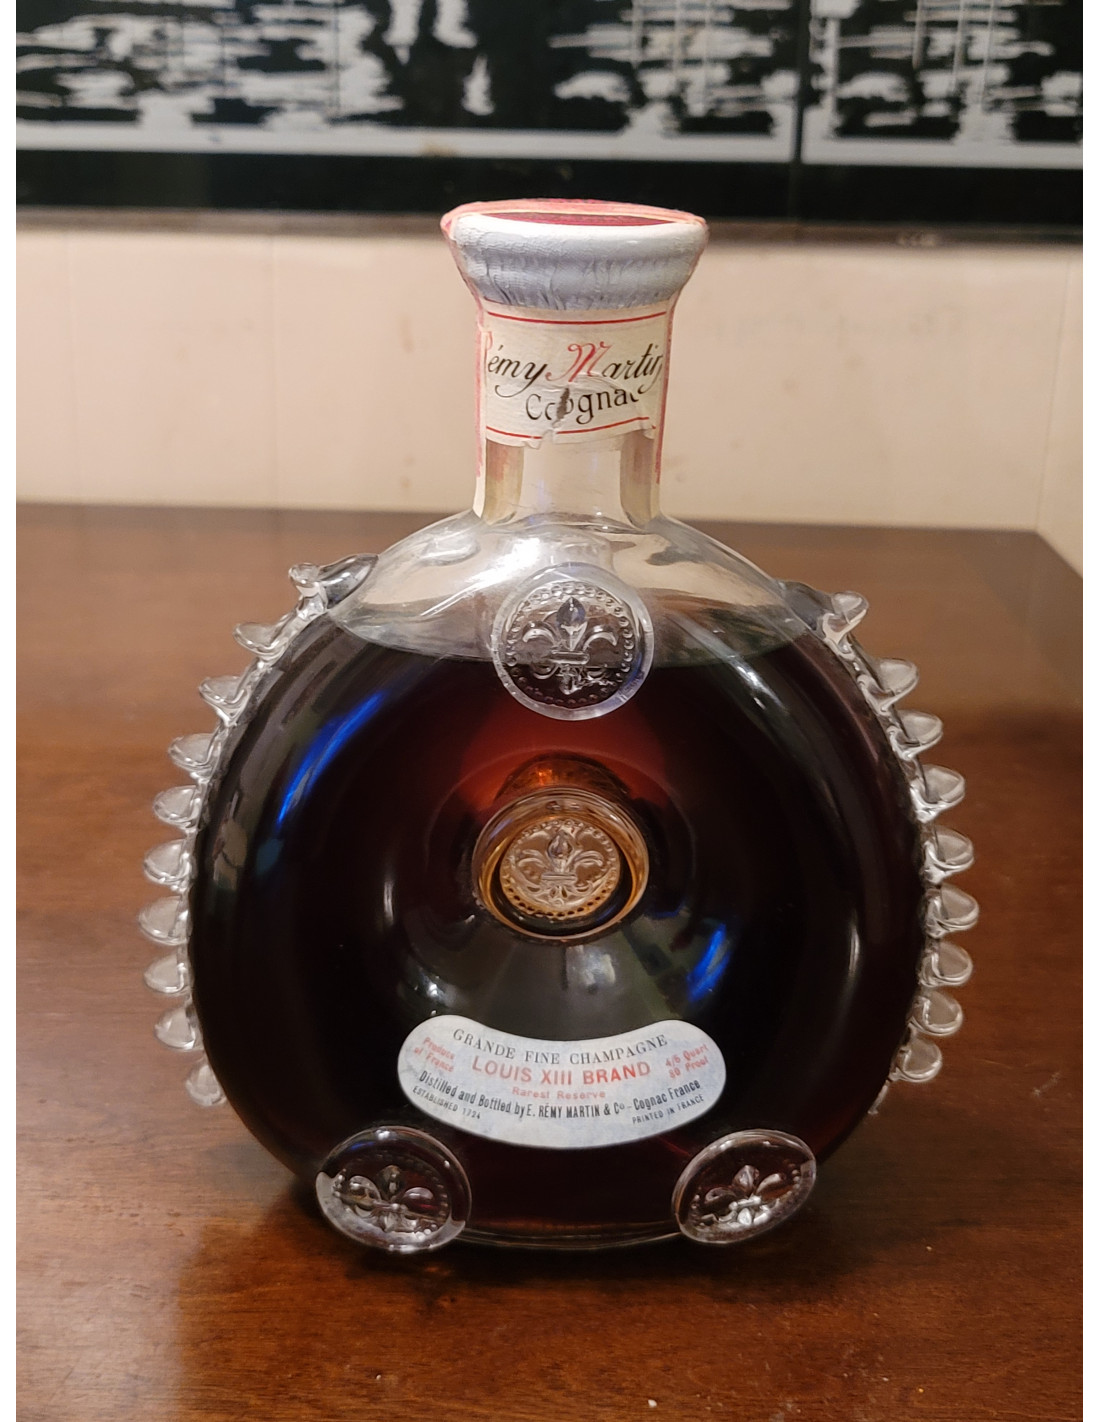 Remy Martin Cognac Grande Fine Champagne Louis XIII brand rarest